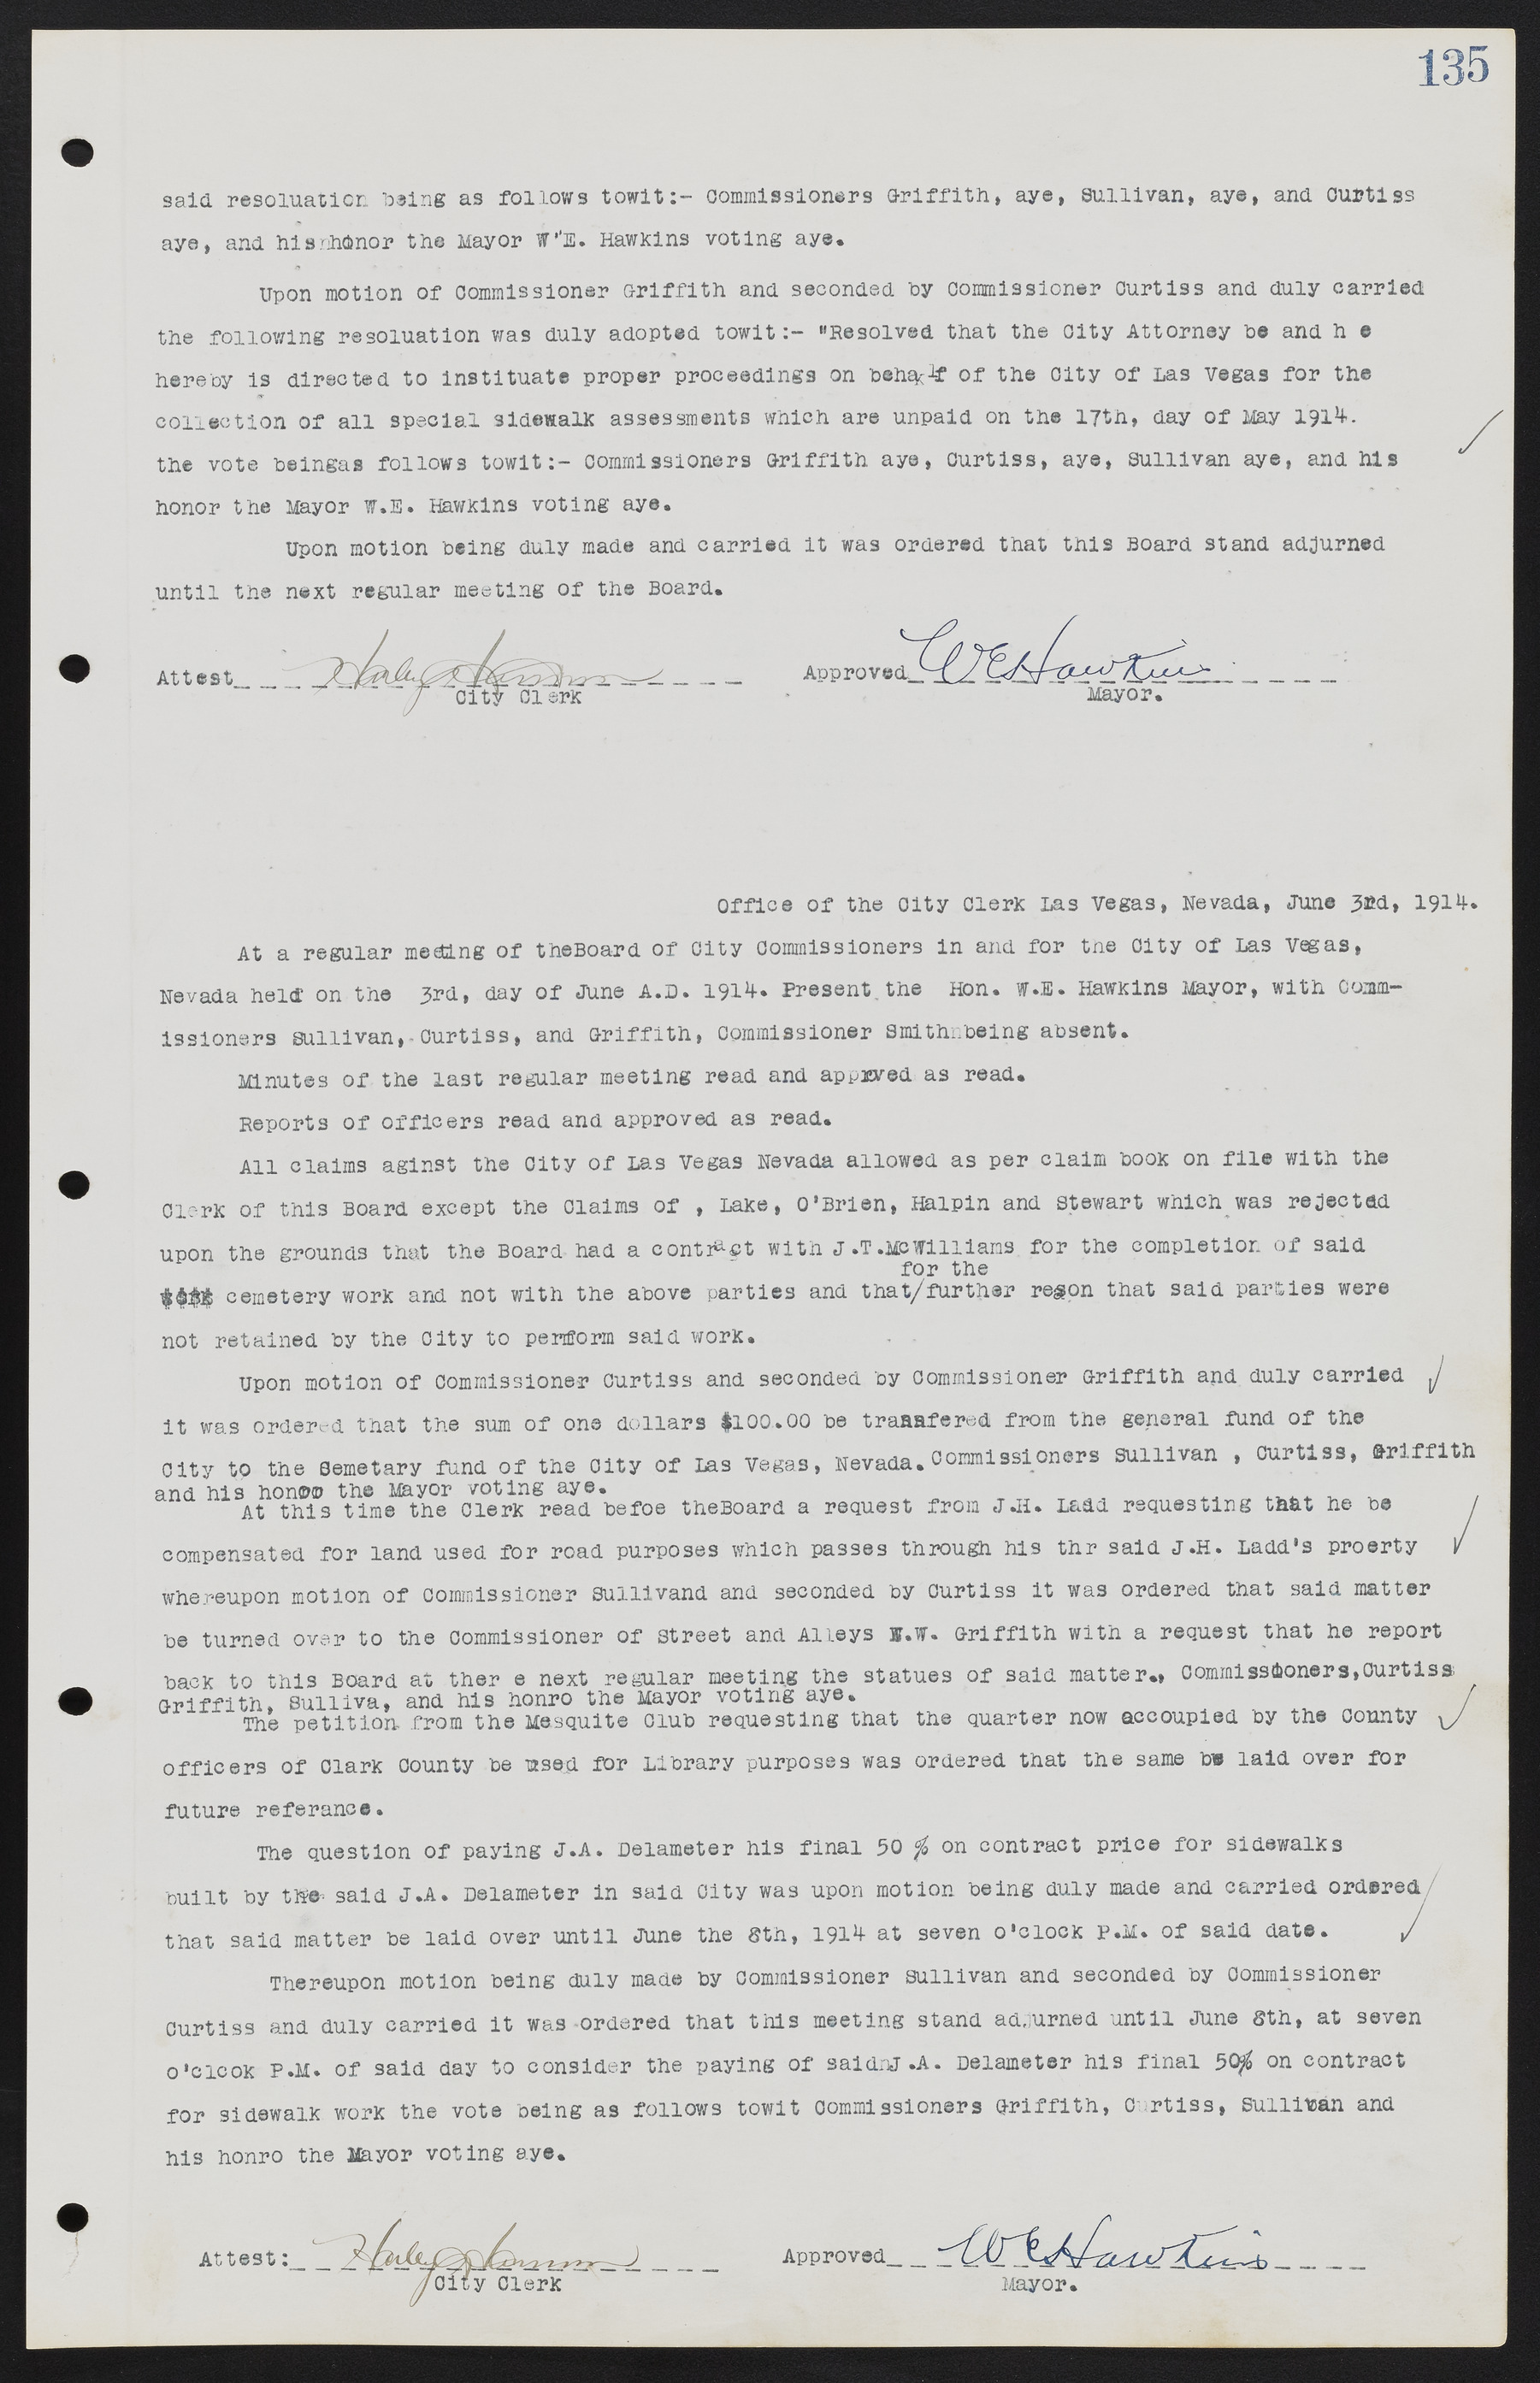 Las Vegas City Commission Minutes, June 22, 1911 to February 7, 1922, lvc000001-149